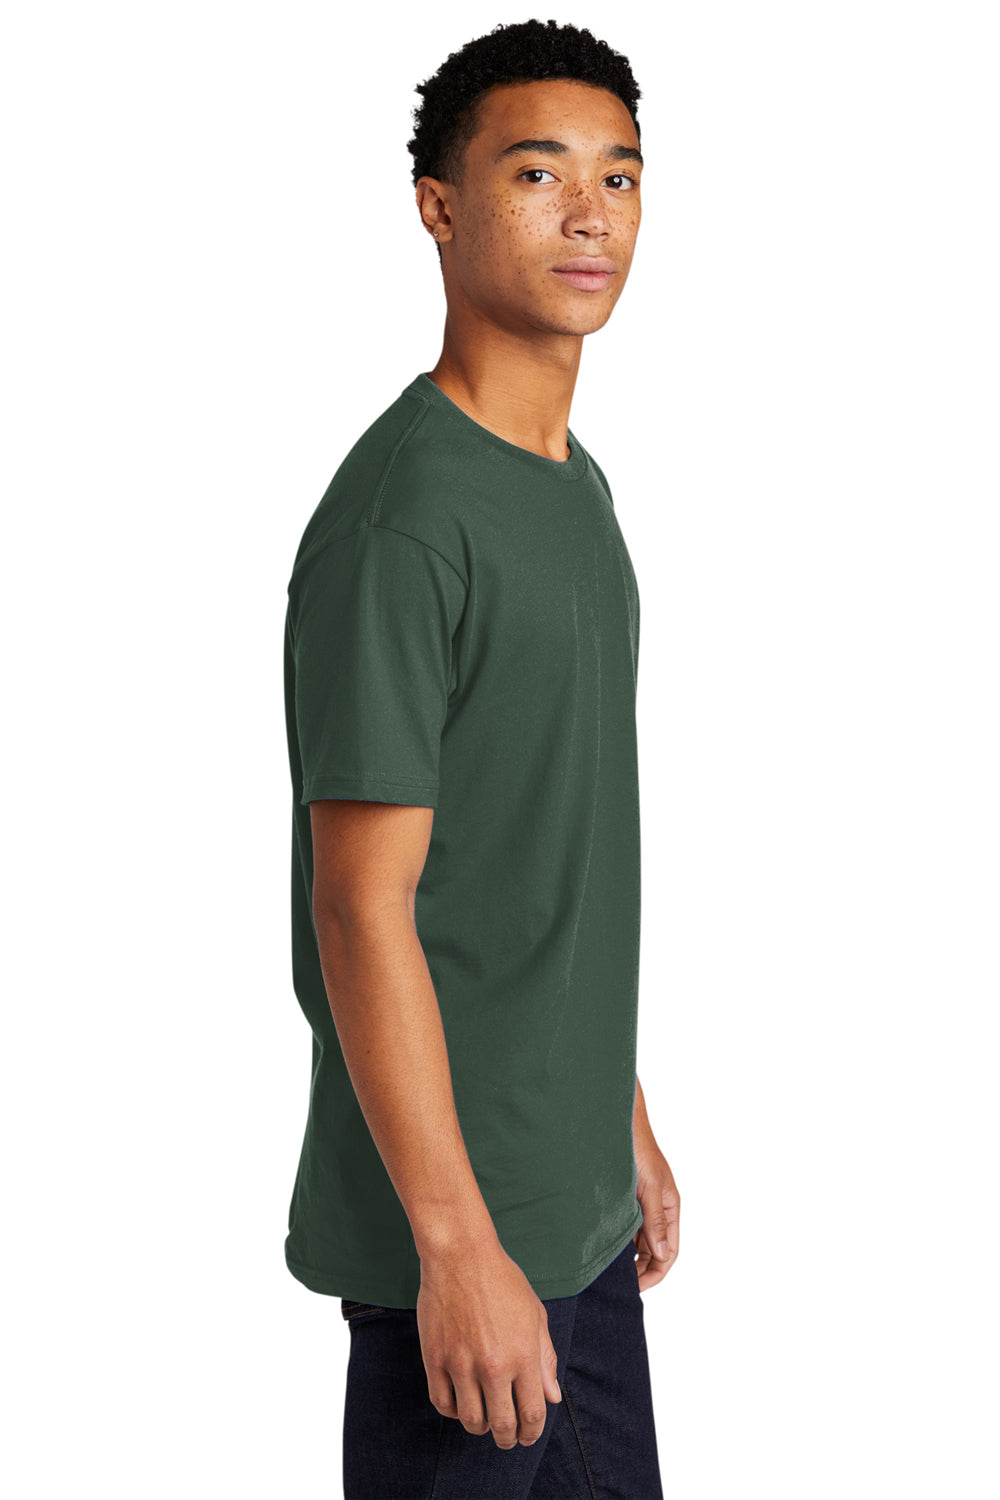 Next Level NL3600/3600 Mens Fine Jersey Short Sleeve Crewneck T-Shirt Royal Pine Green Side